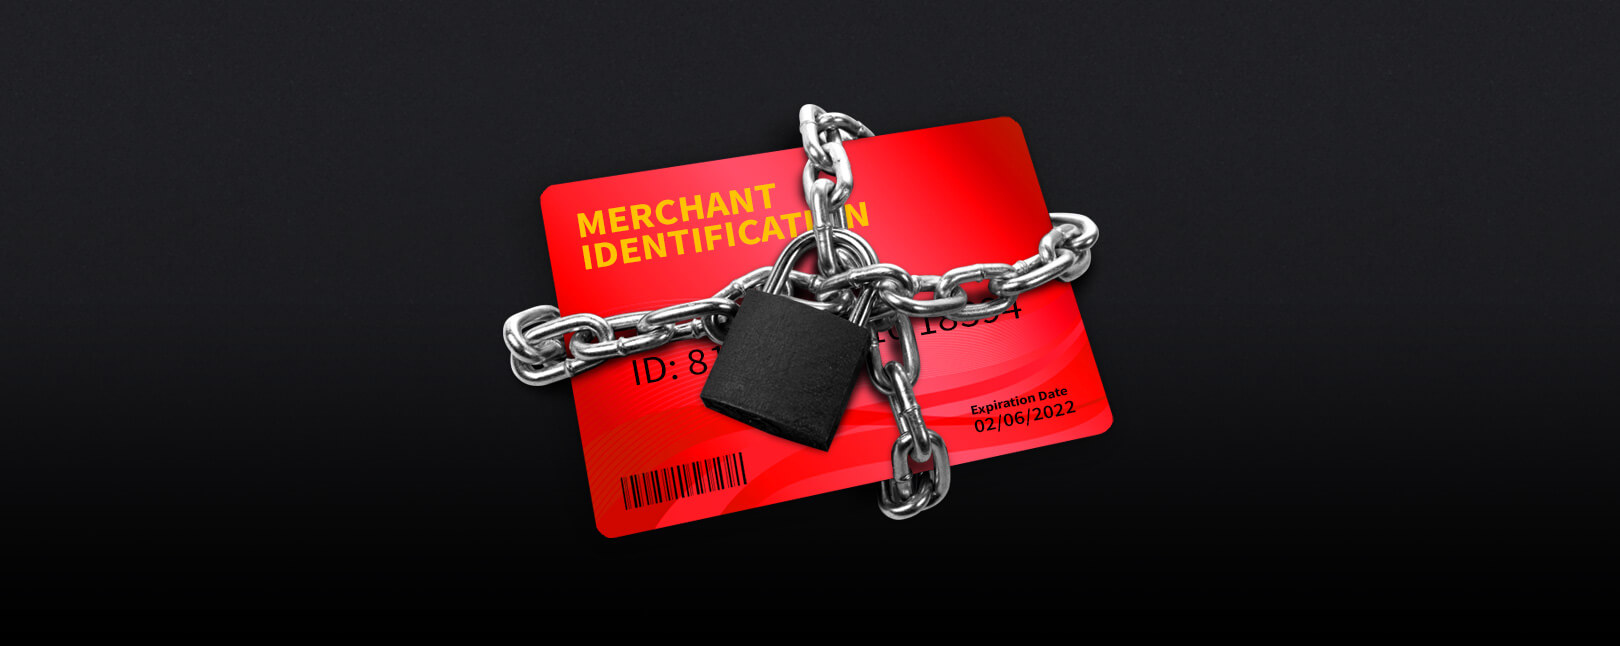 Merchant Identification Number